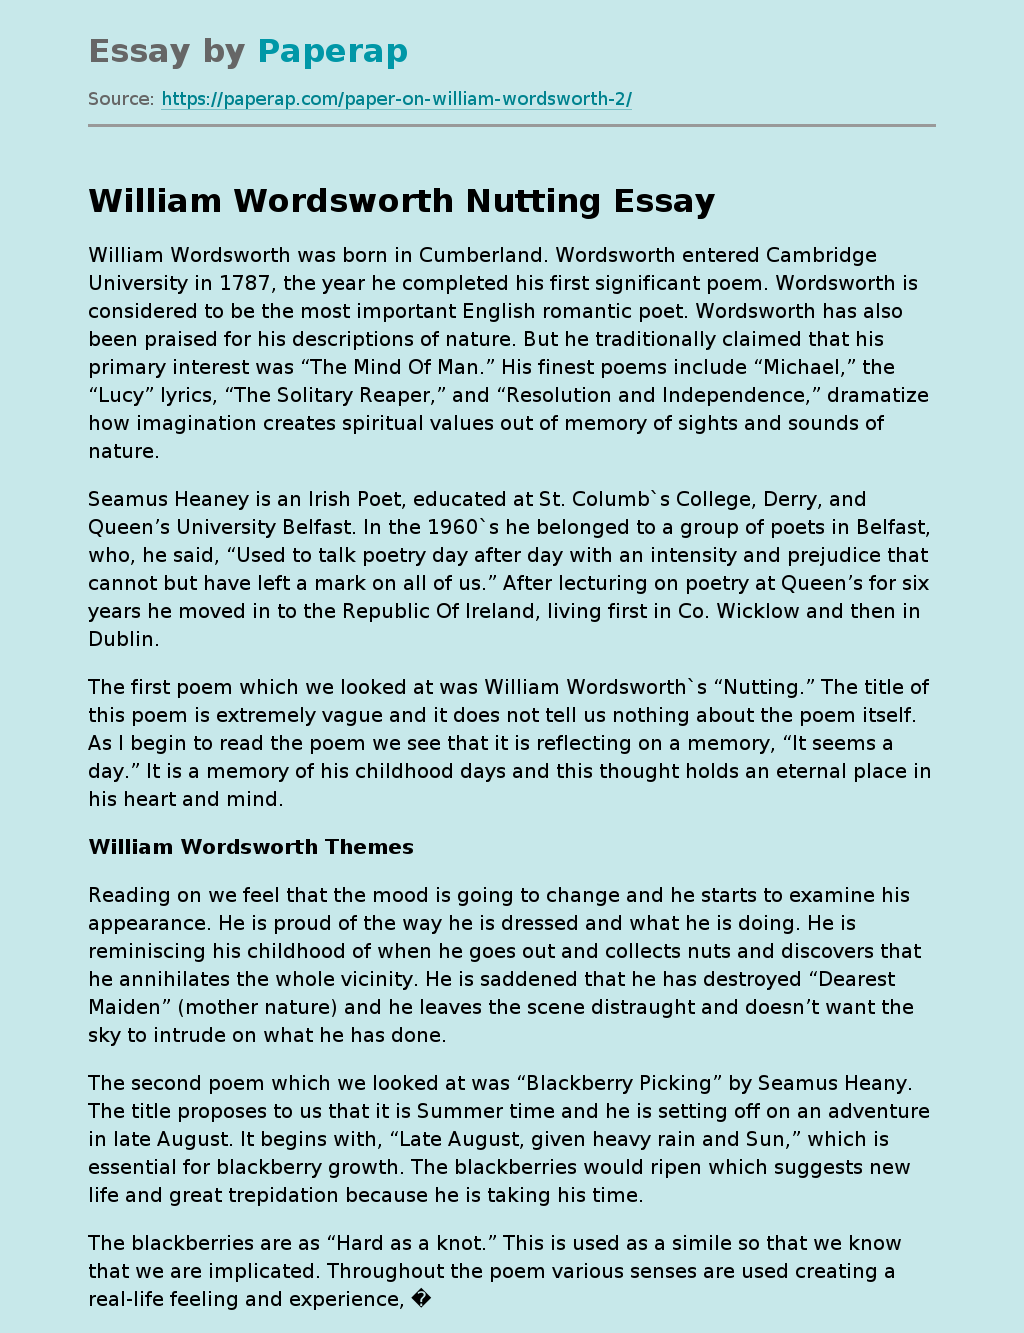 William Wordsworth Themes